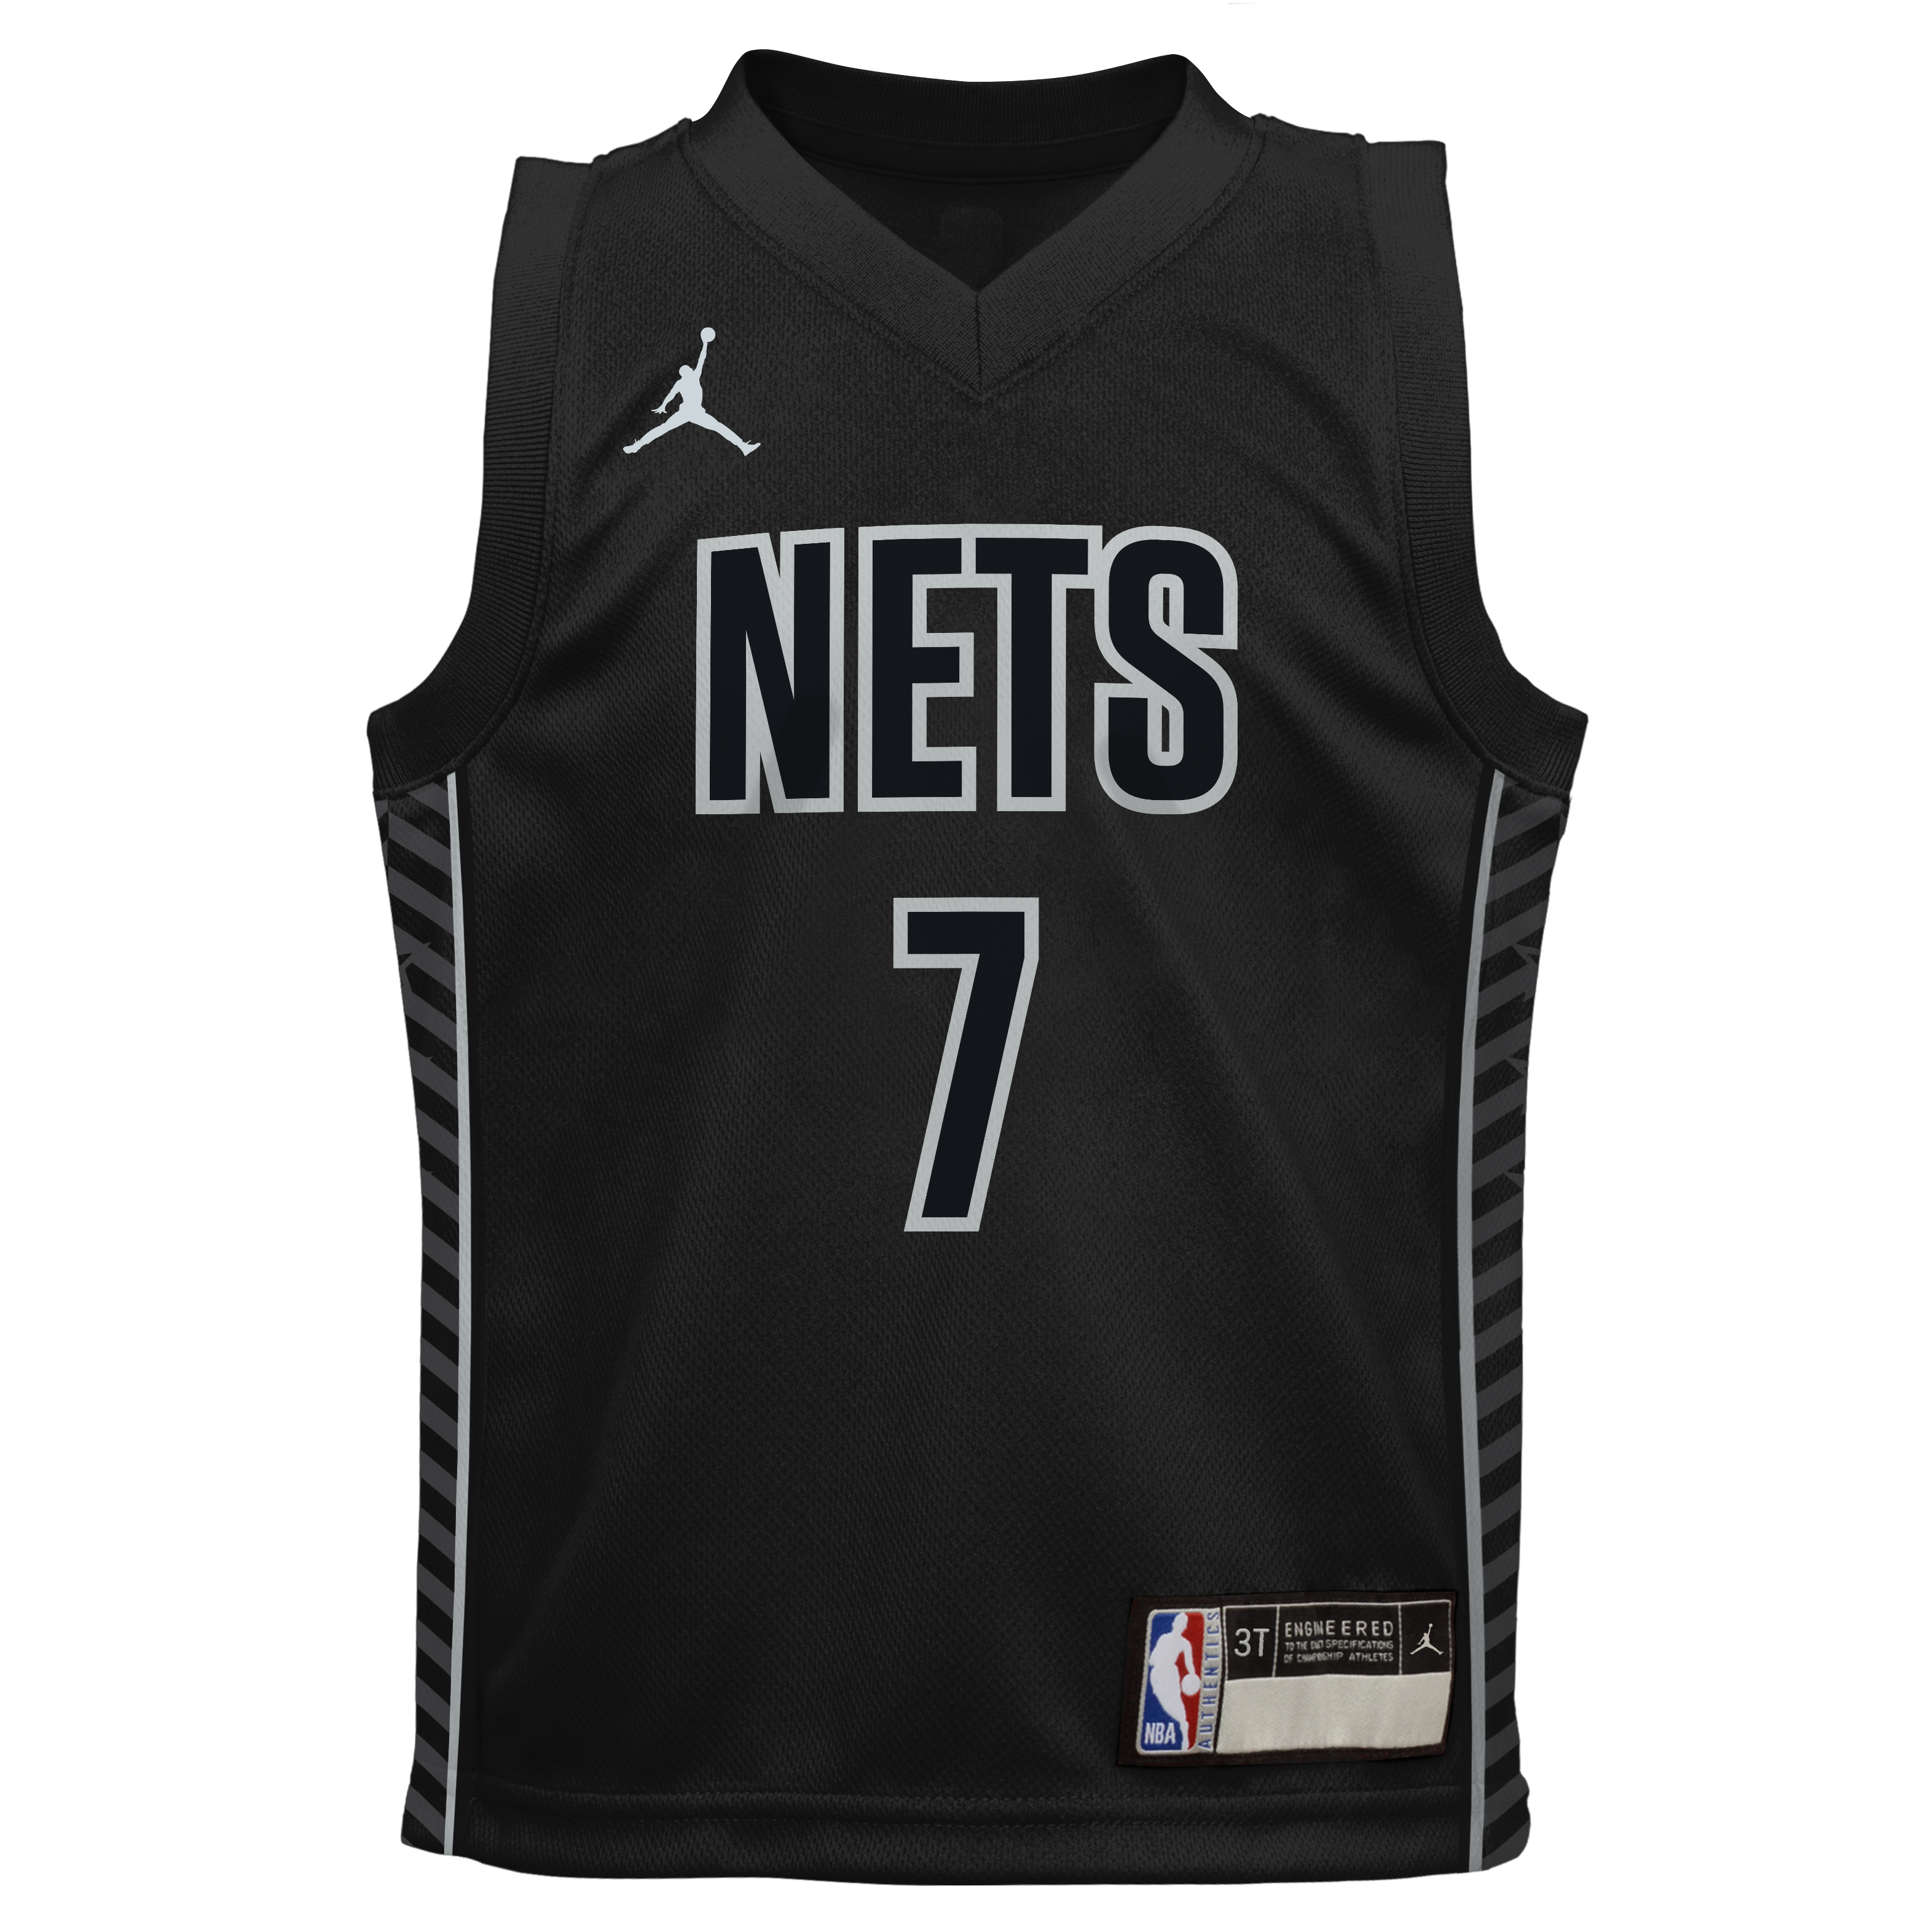 Nike NBA Brooklyn Nets Authentic Jersey Black White Size 56 Brand New